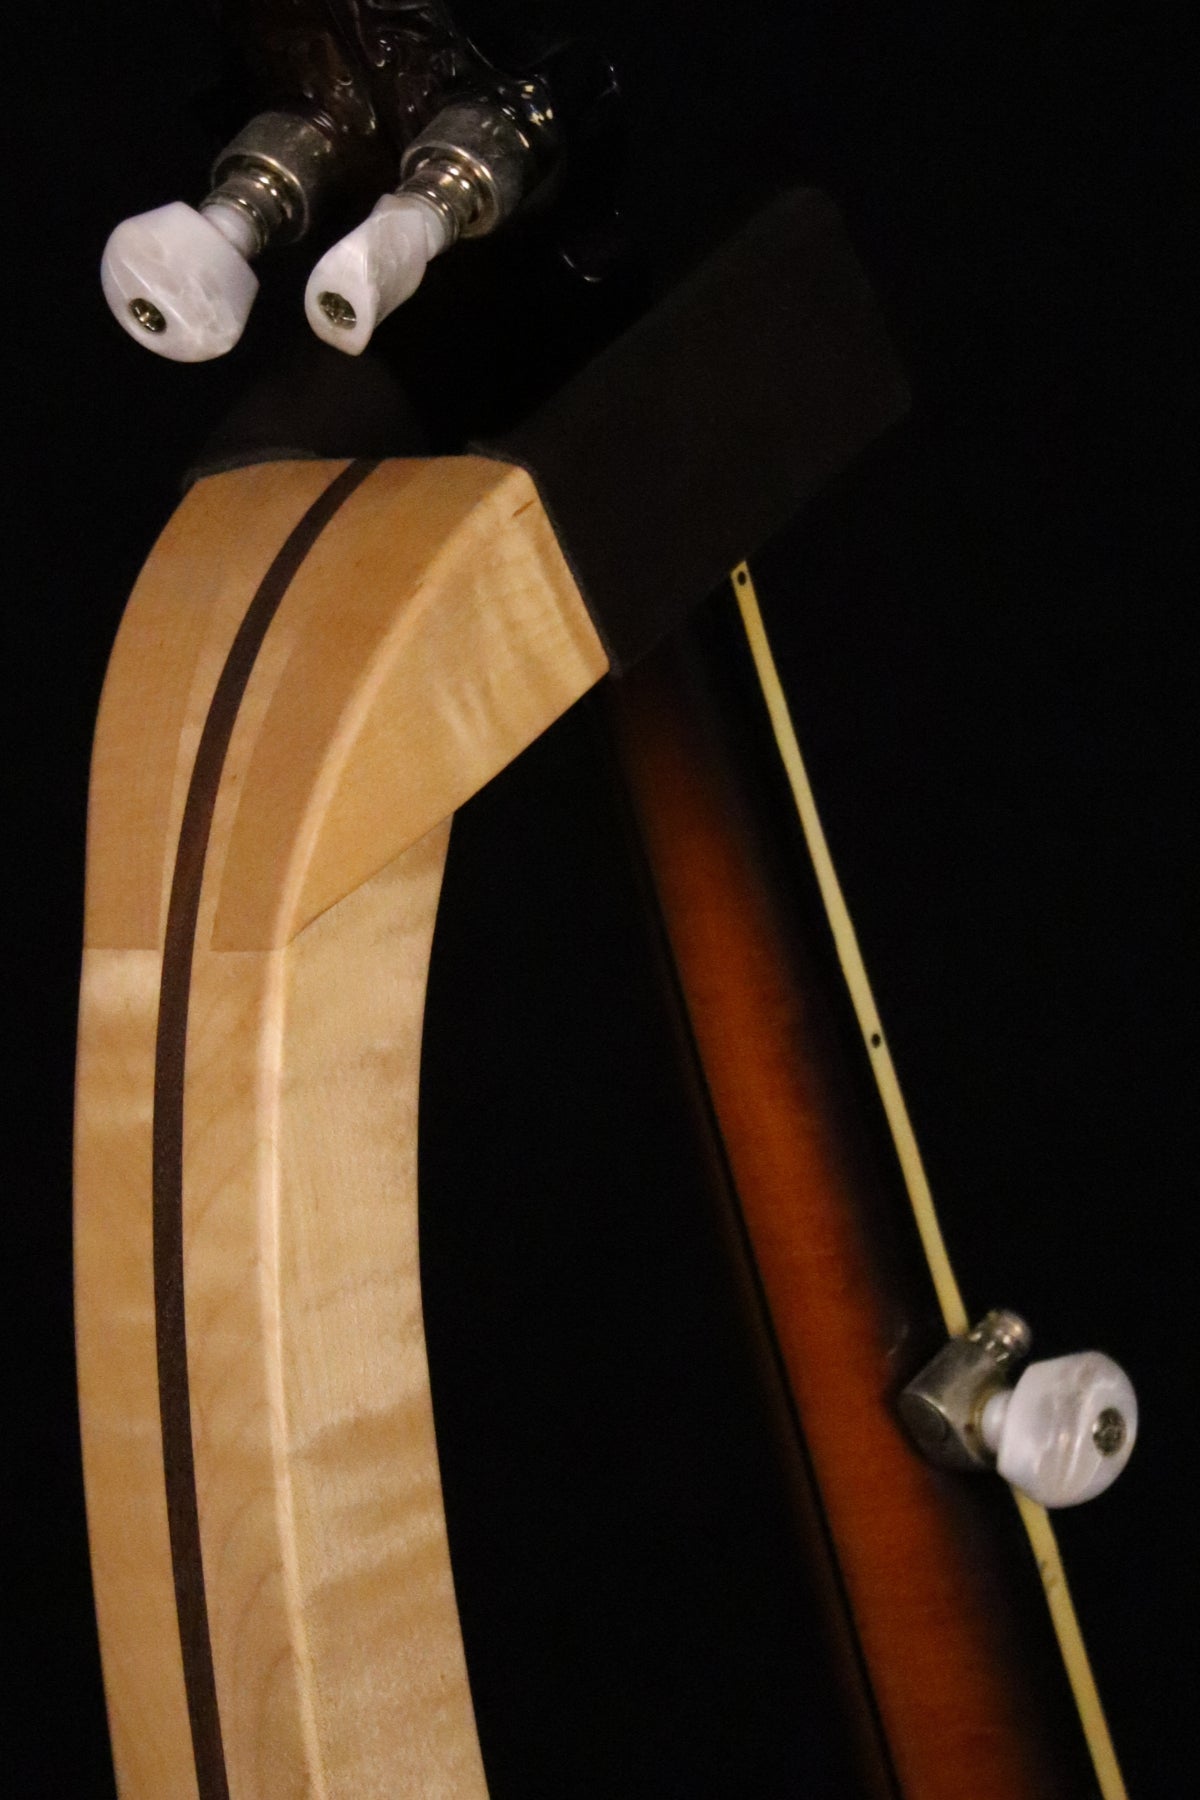 Folding curly maple and walnut wood banjo floor stand yoke detail image with Alvarez banjo